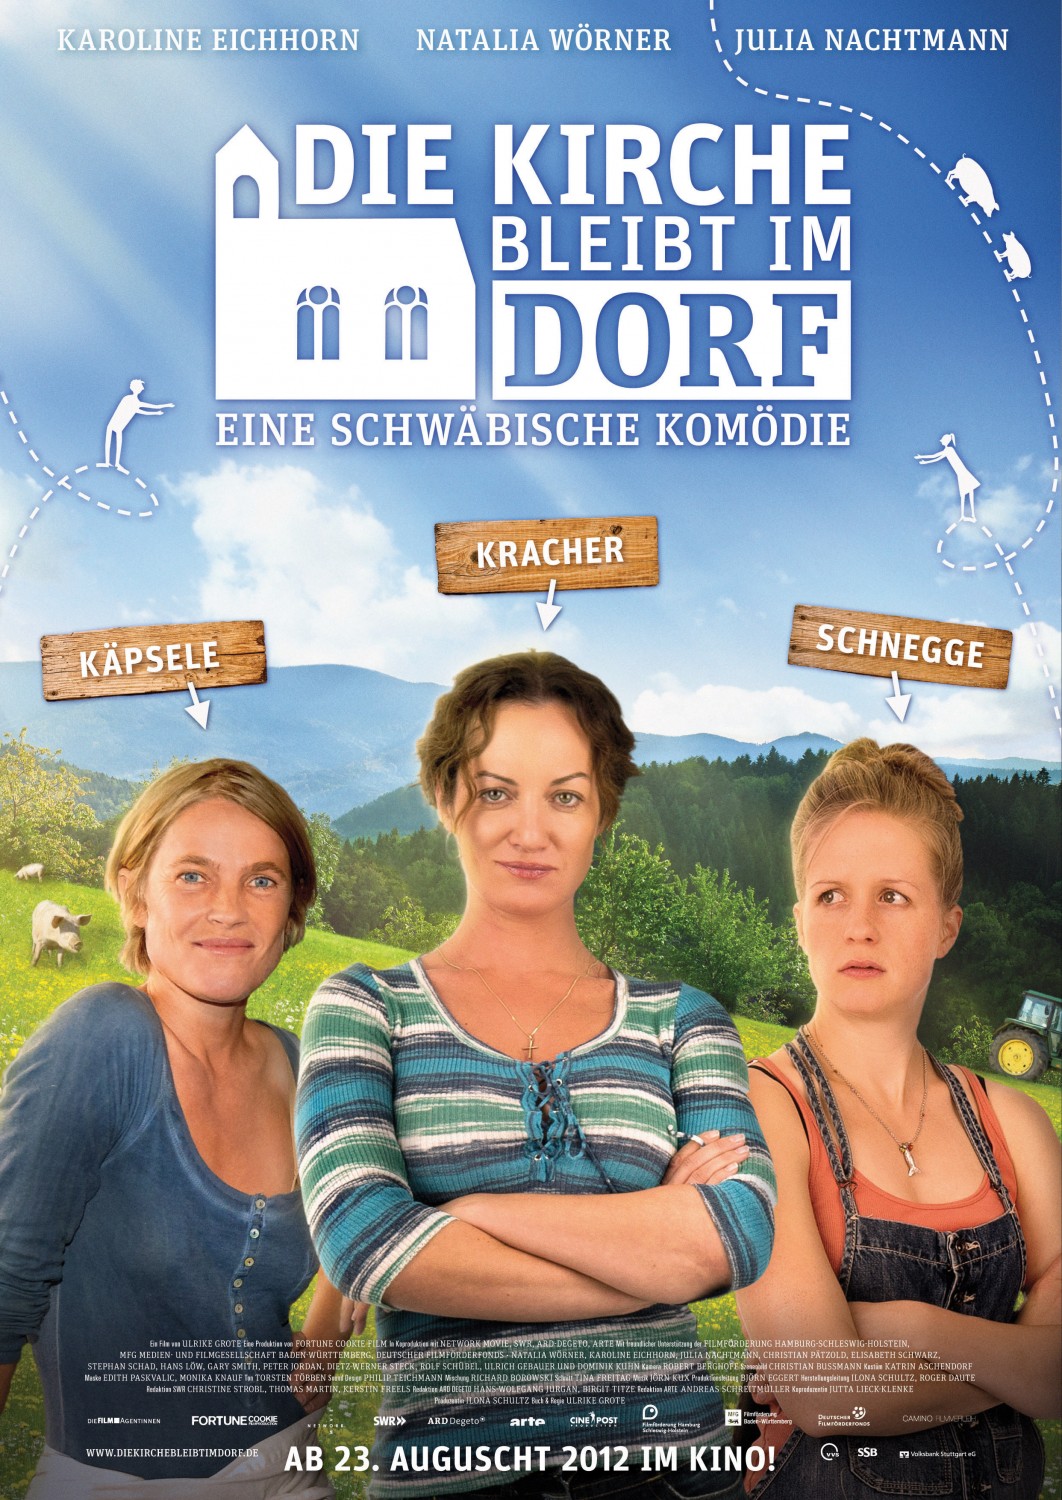 Extra Large Movie Poster Image for Die Kirche bleibt im Dorf 